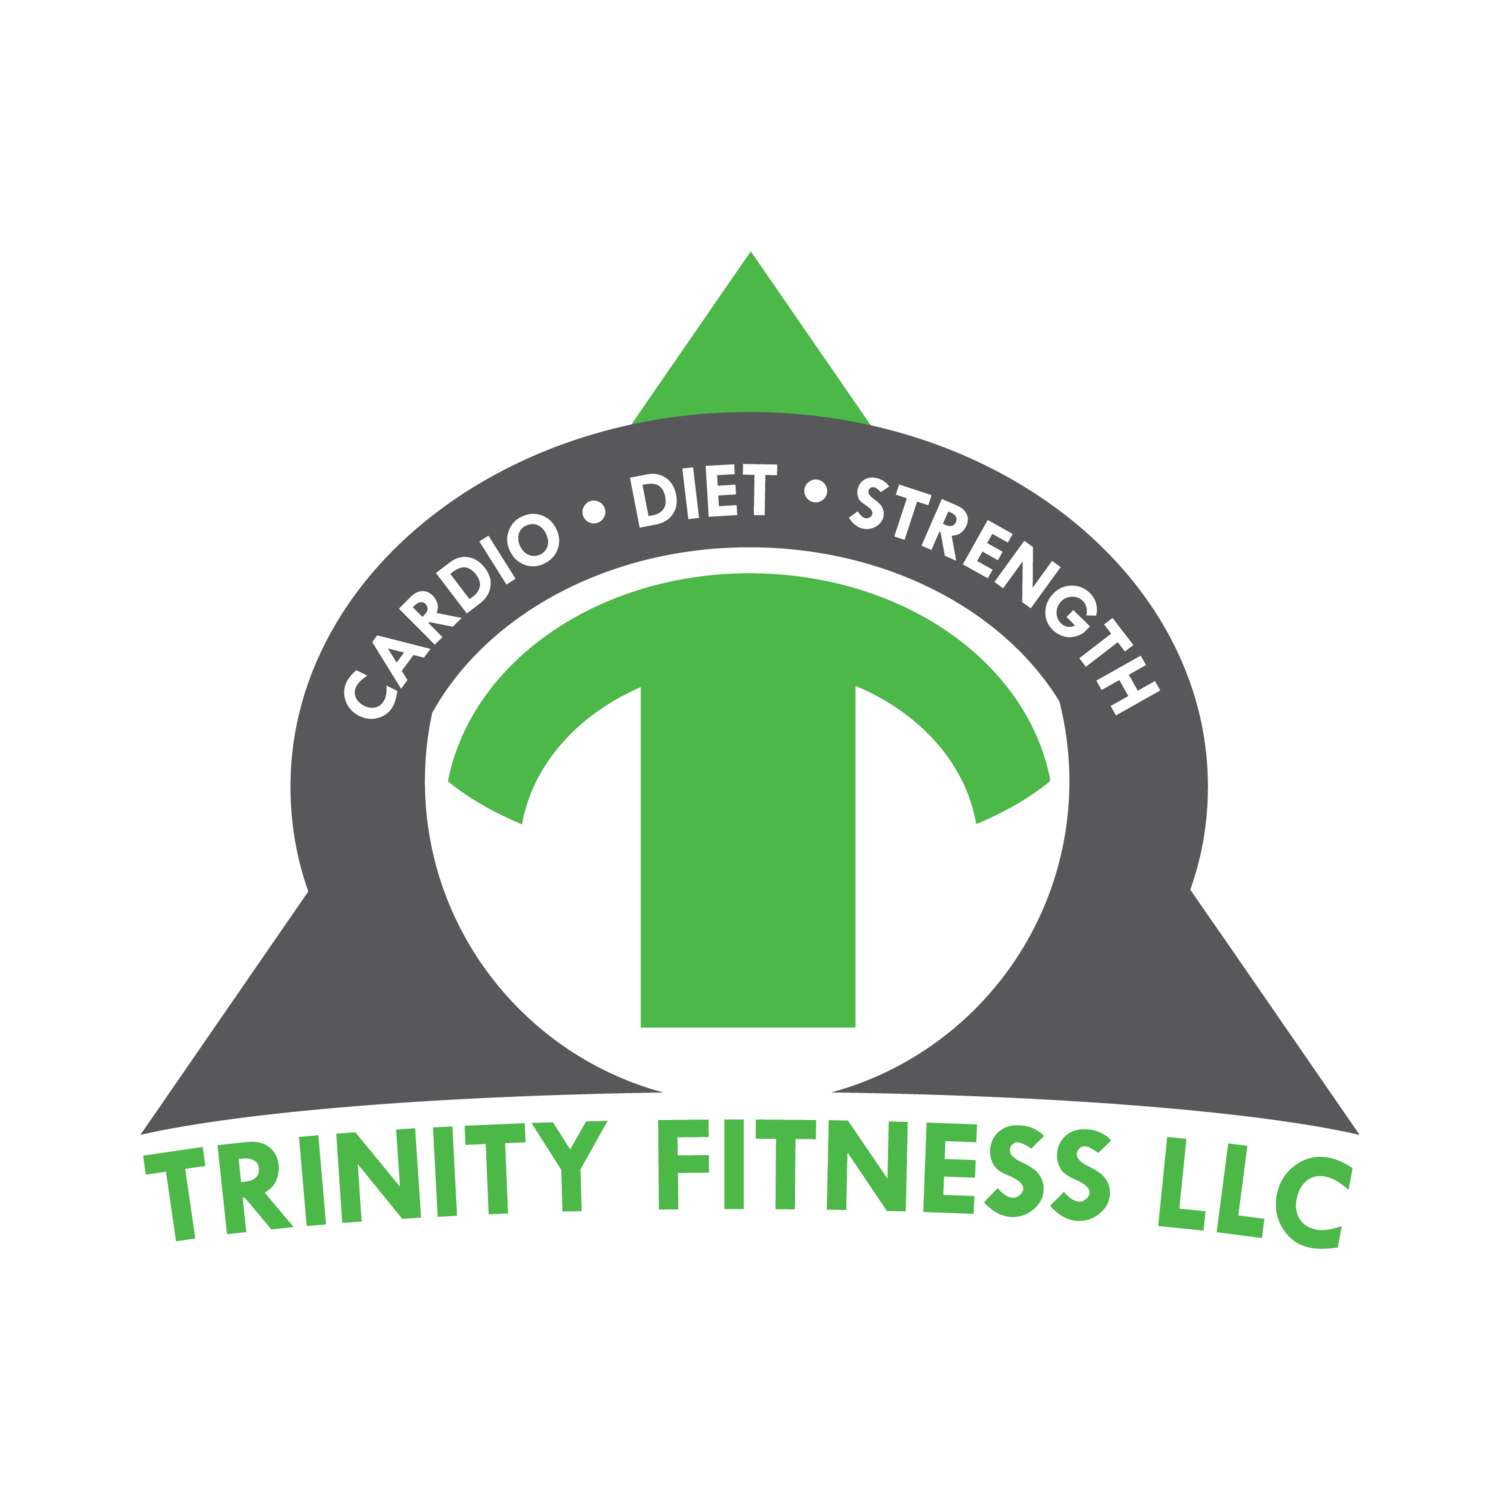 Trinity Fitness LLC